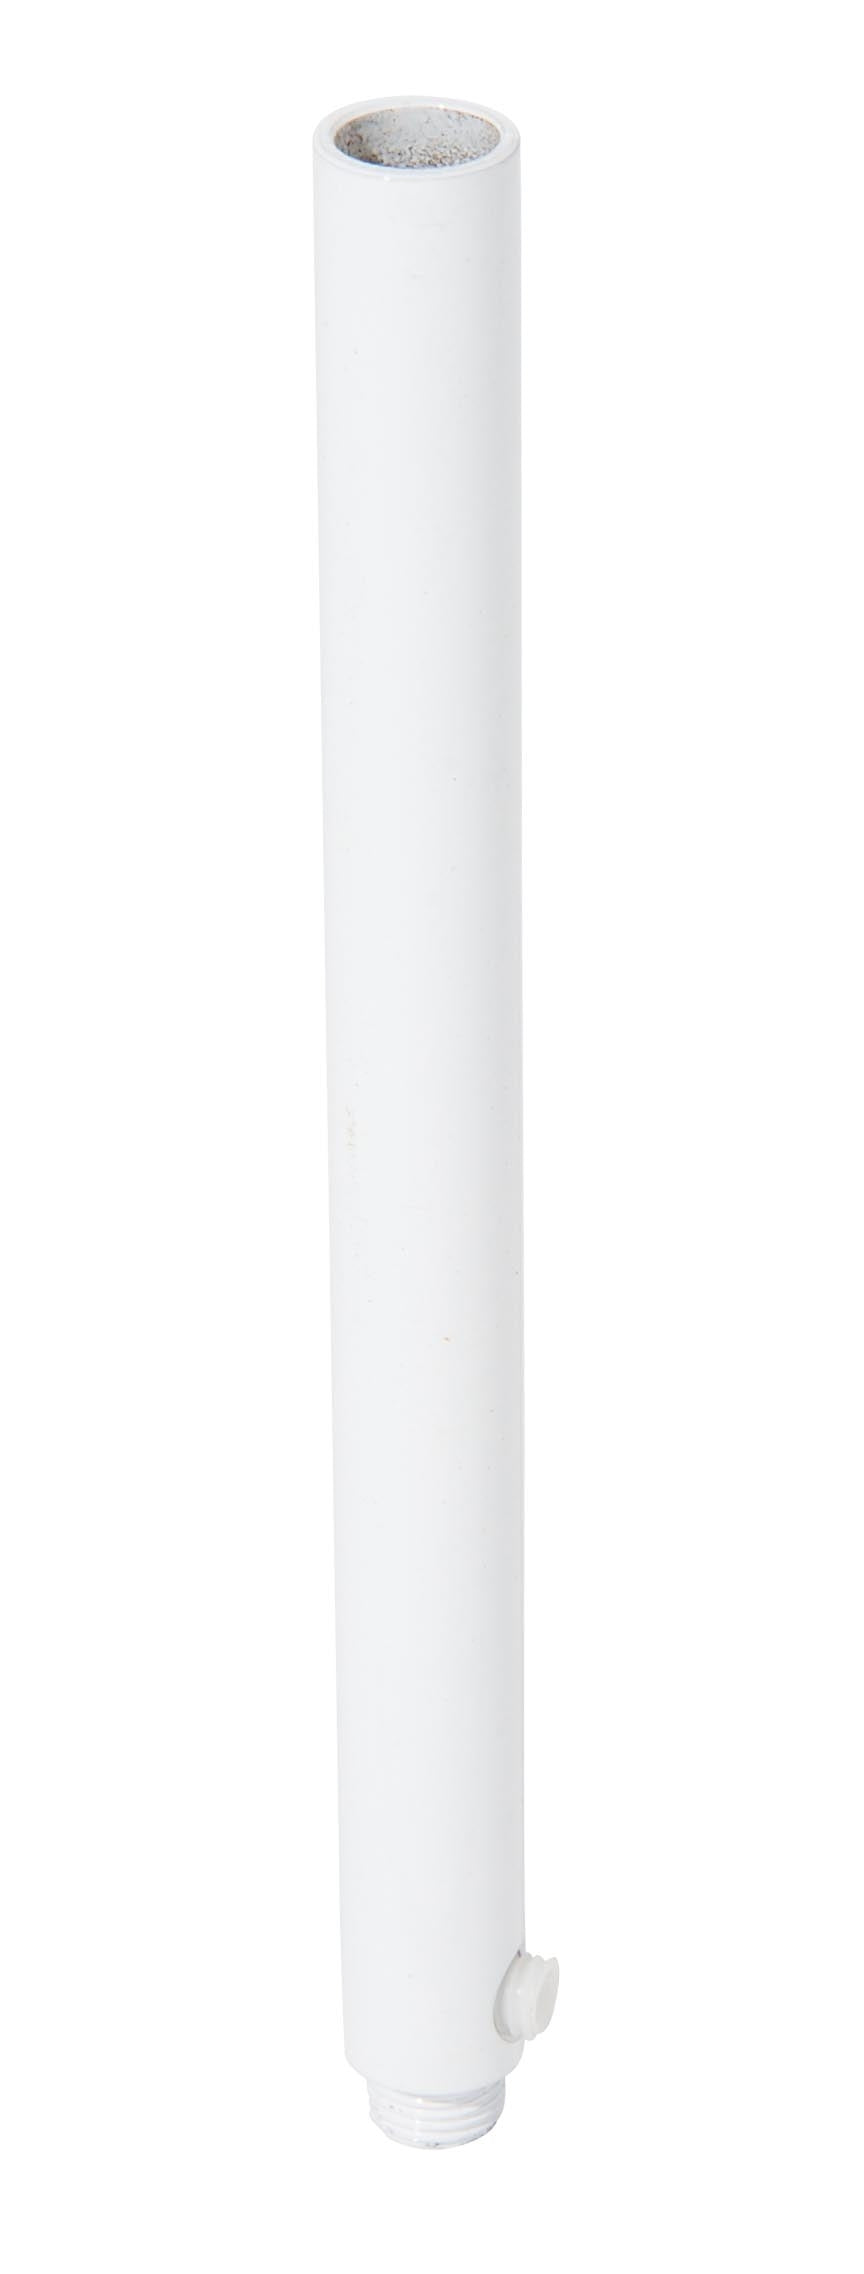 6 Inch Tall White Enamel Finish Brass Hollow Transition Cord Grip Bushing w/Polycarbonite Set Screw, 1/8M